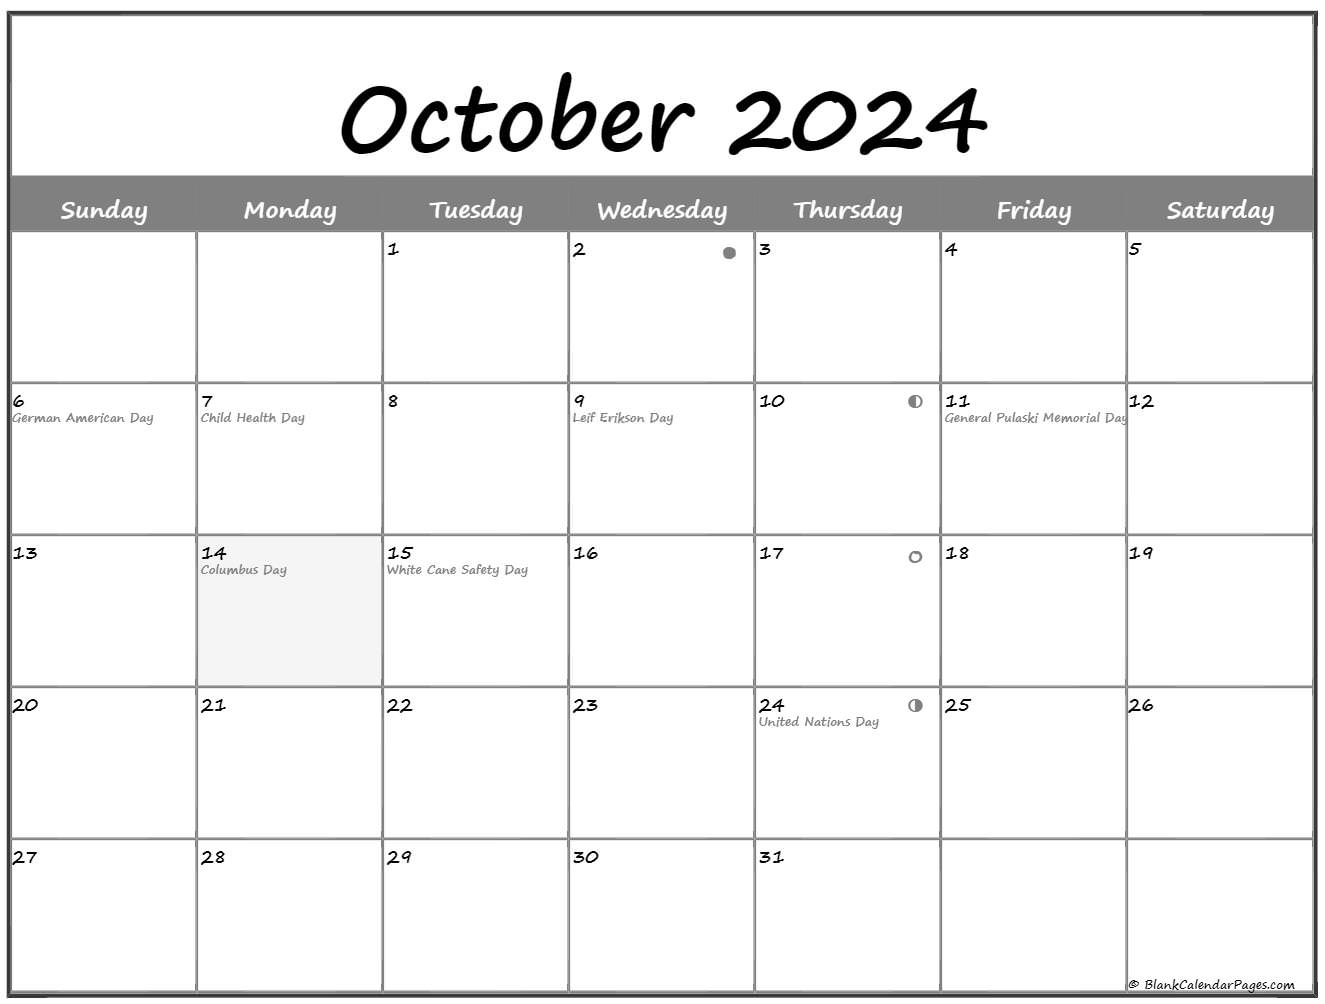 October 2020 Lunar Calendar | Moon Phase Calendar